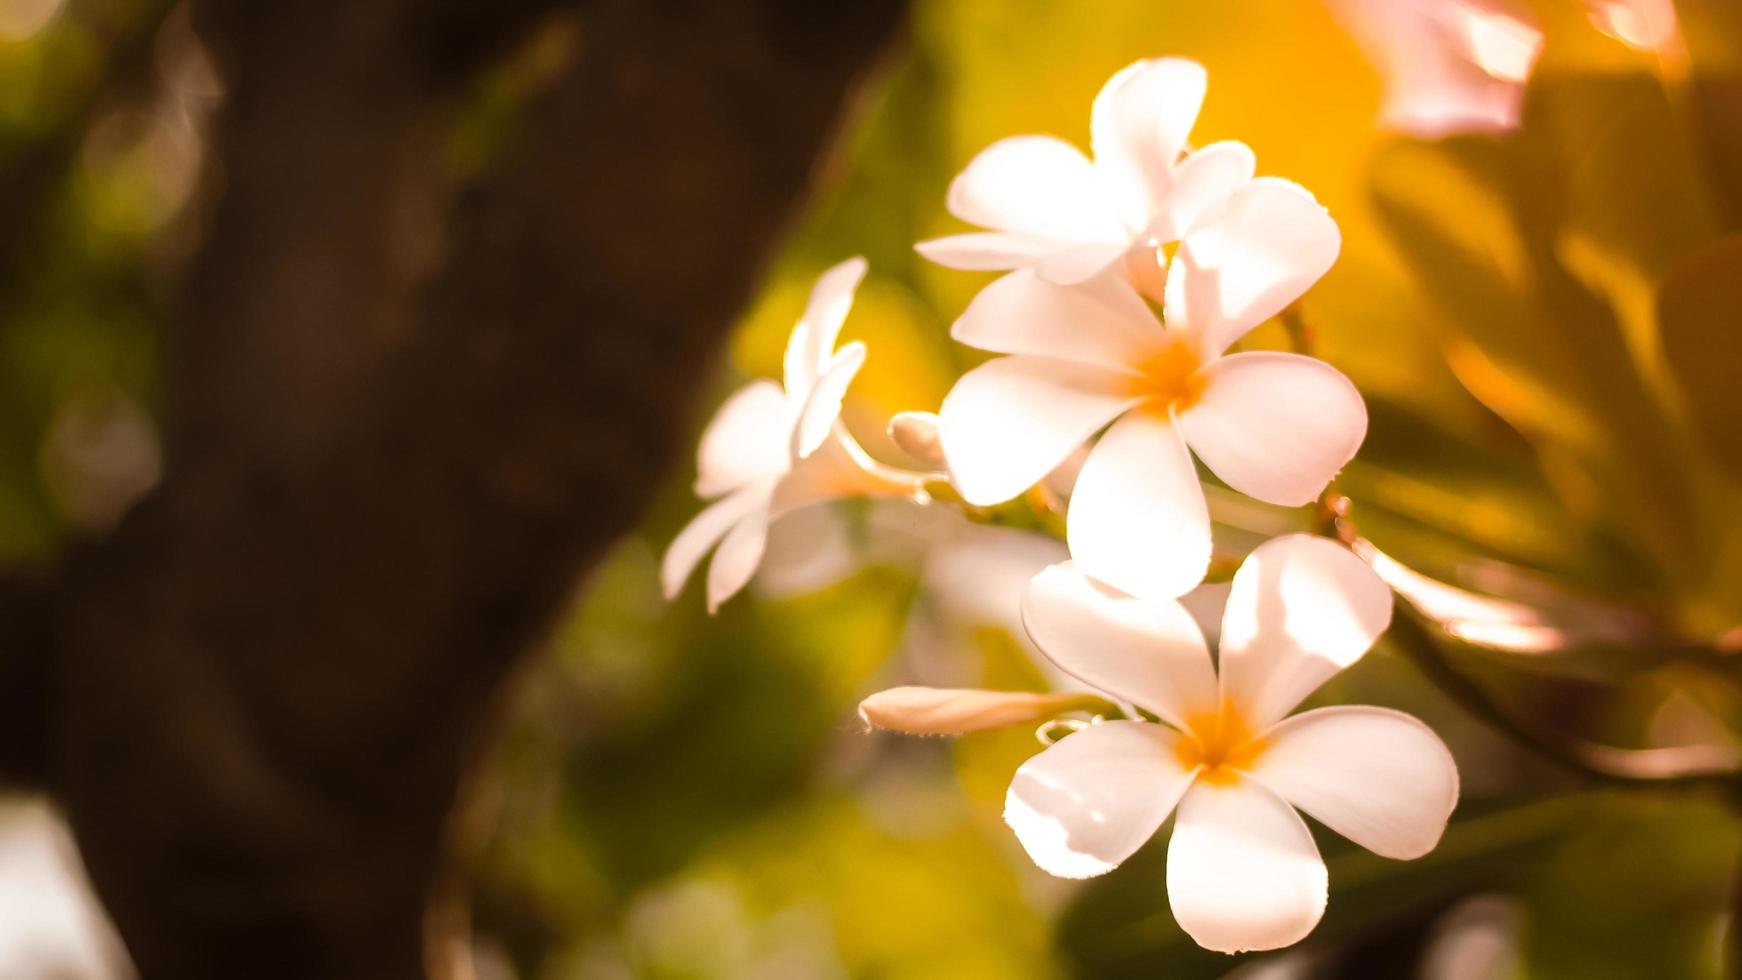 flores tropicais frangipani plumeria. linda flor de plumeria rubra branca  5150892 Foto de stock no Vecteezy